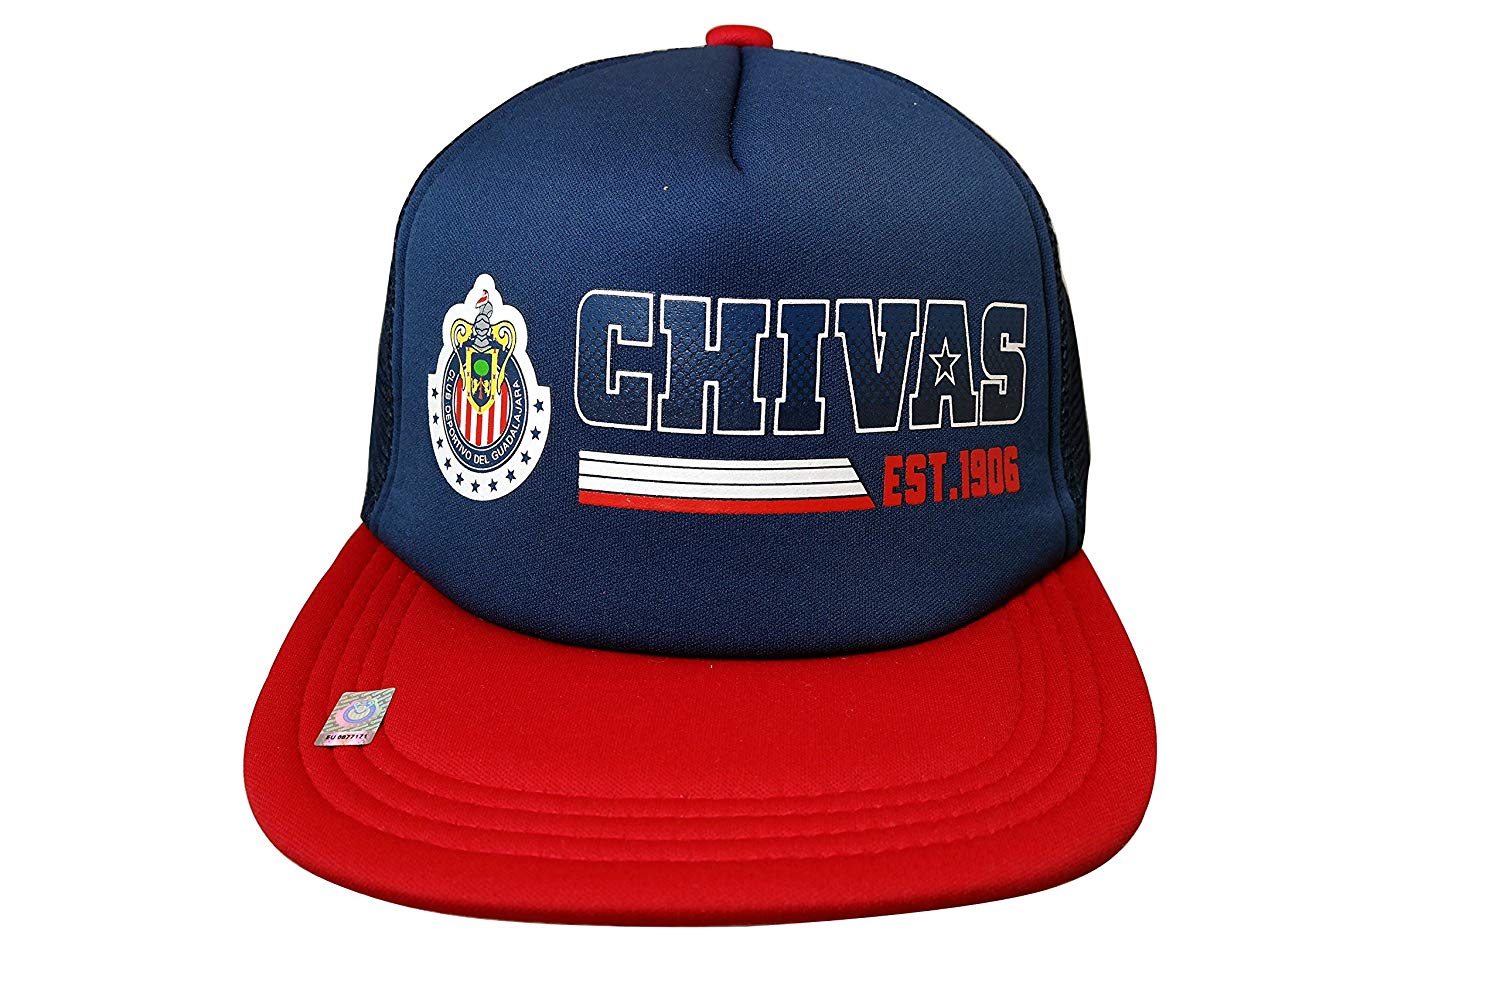 L Team Logo - Amazon.com : CHIVAS de GUADALAJARA OFFICIAL TEAM LOGO CAP / HAT ...